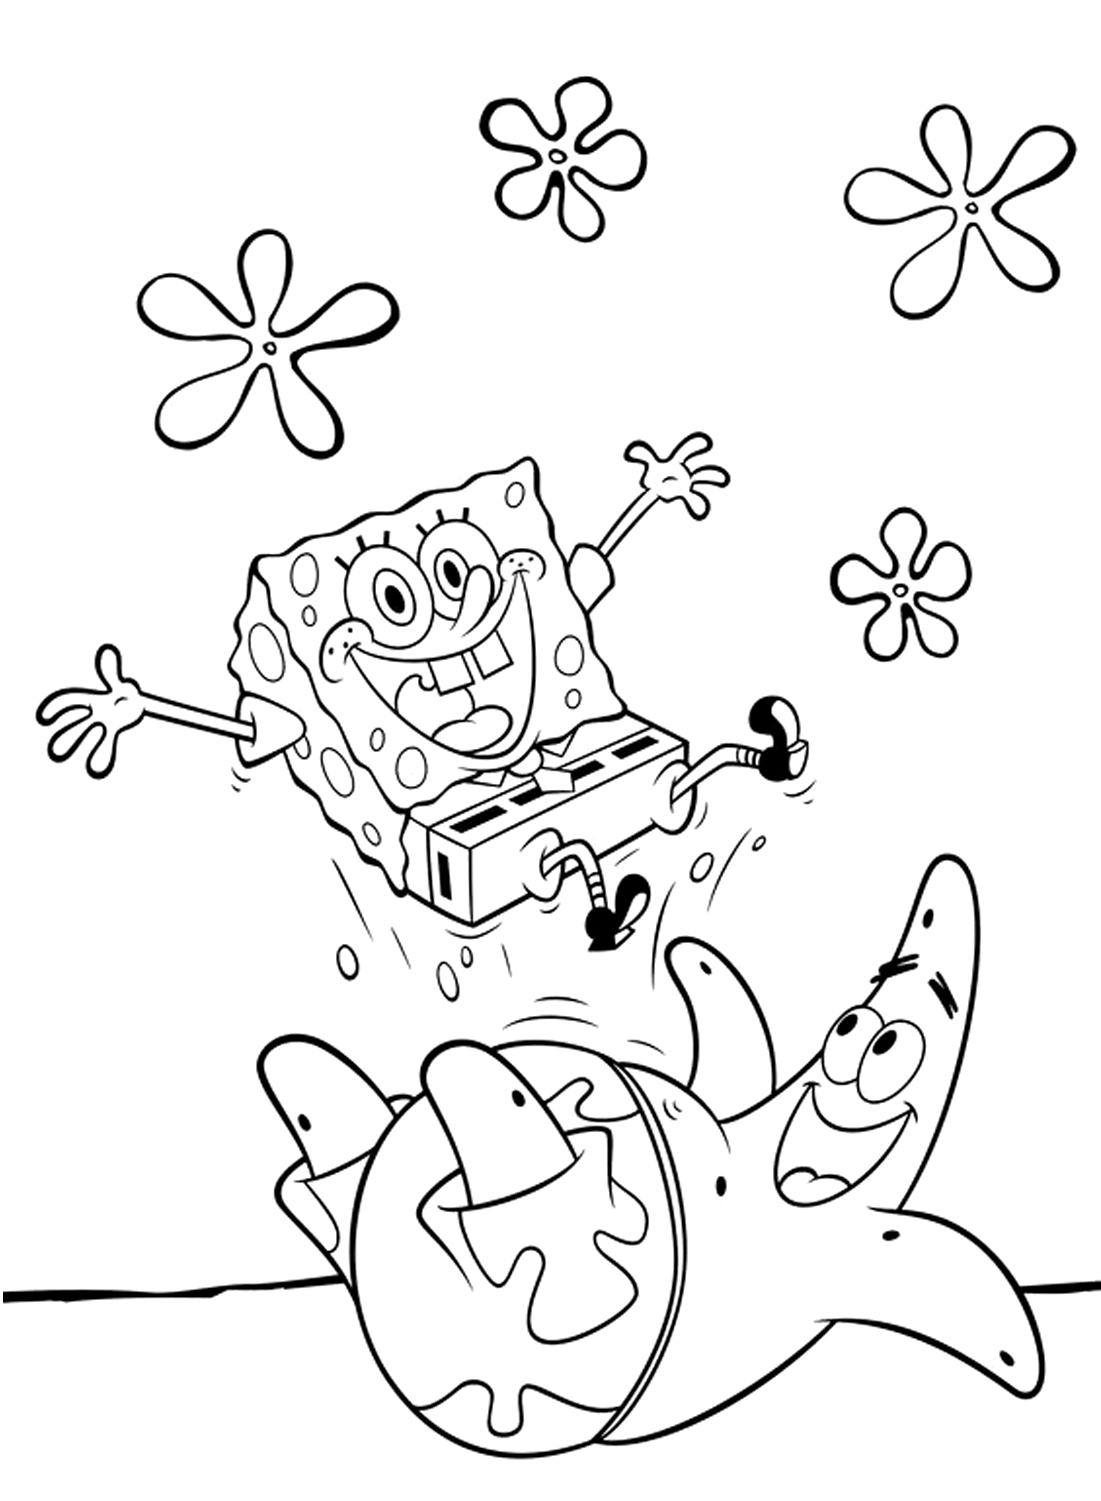 Pagina da colorare di Spongebob Squarepants felice da Spongebob